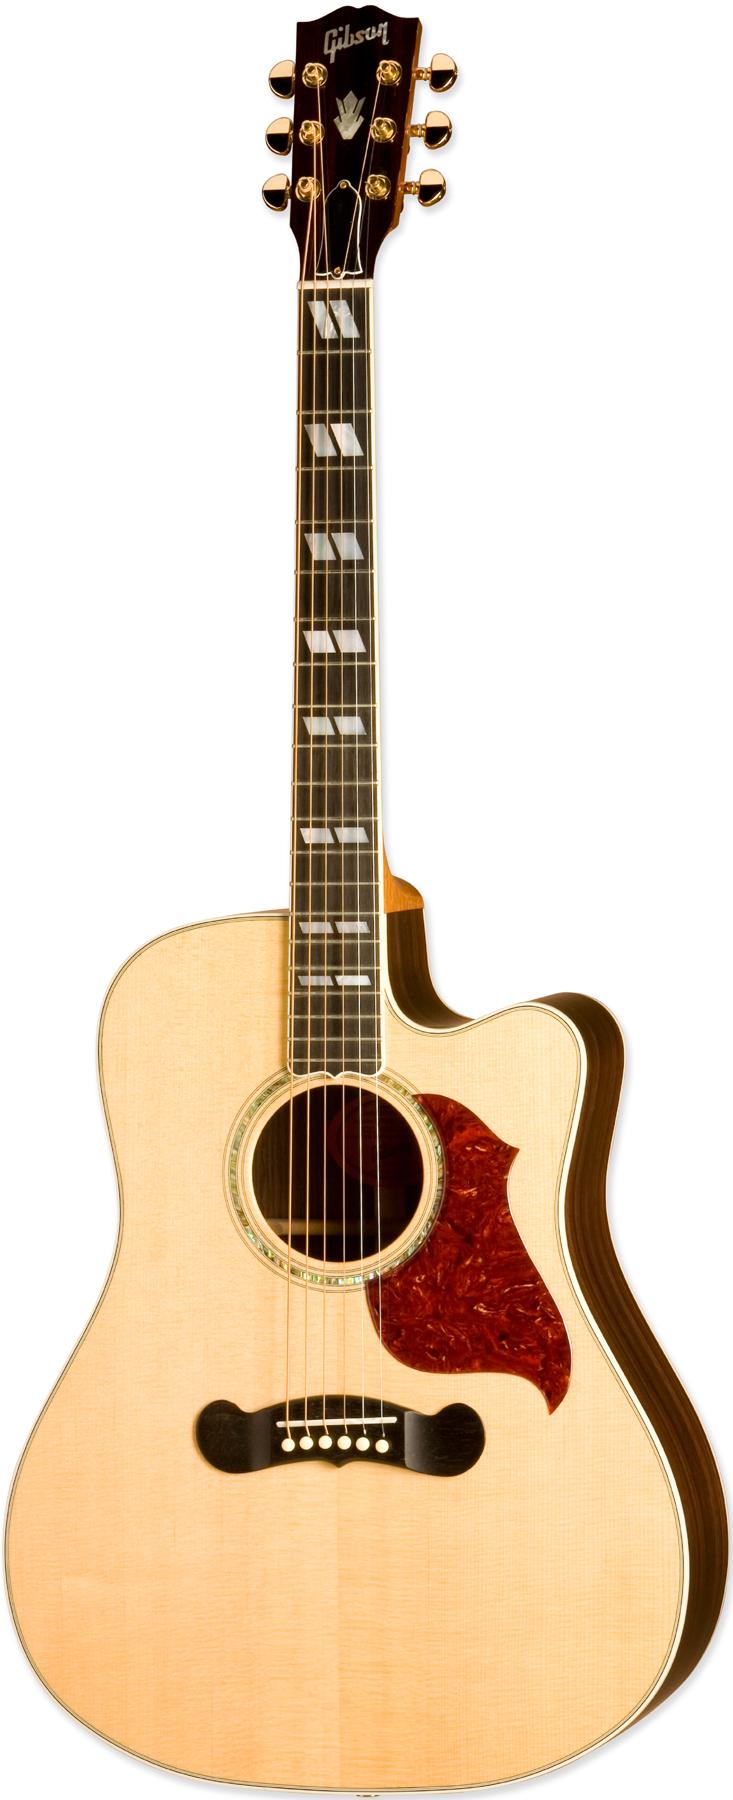 Foto Gibson Guitarra Electroacústica Songwriter Studio Cutaway NA foto 319345